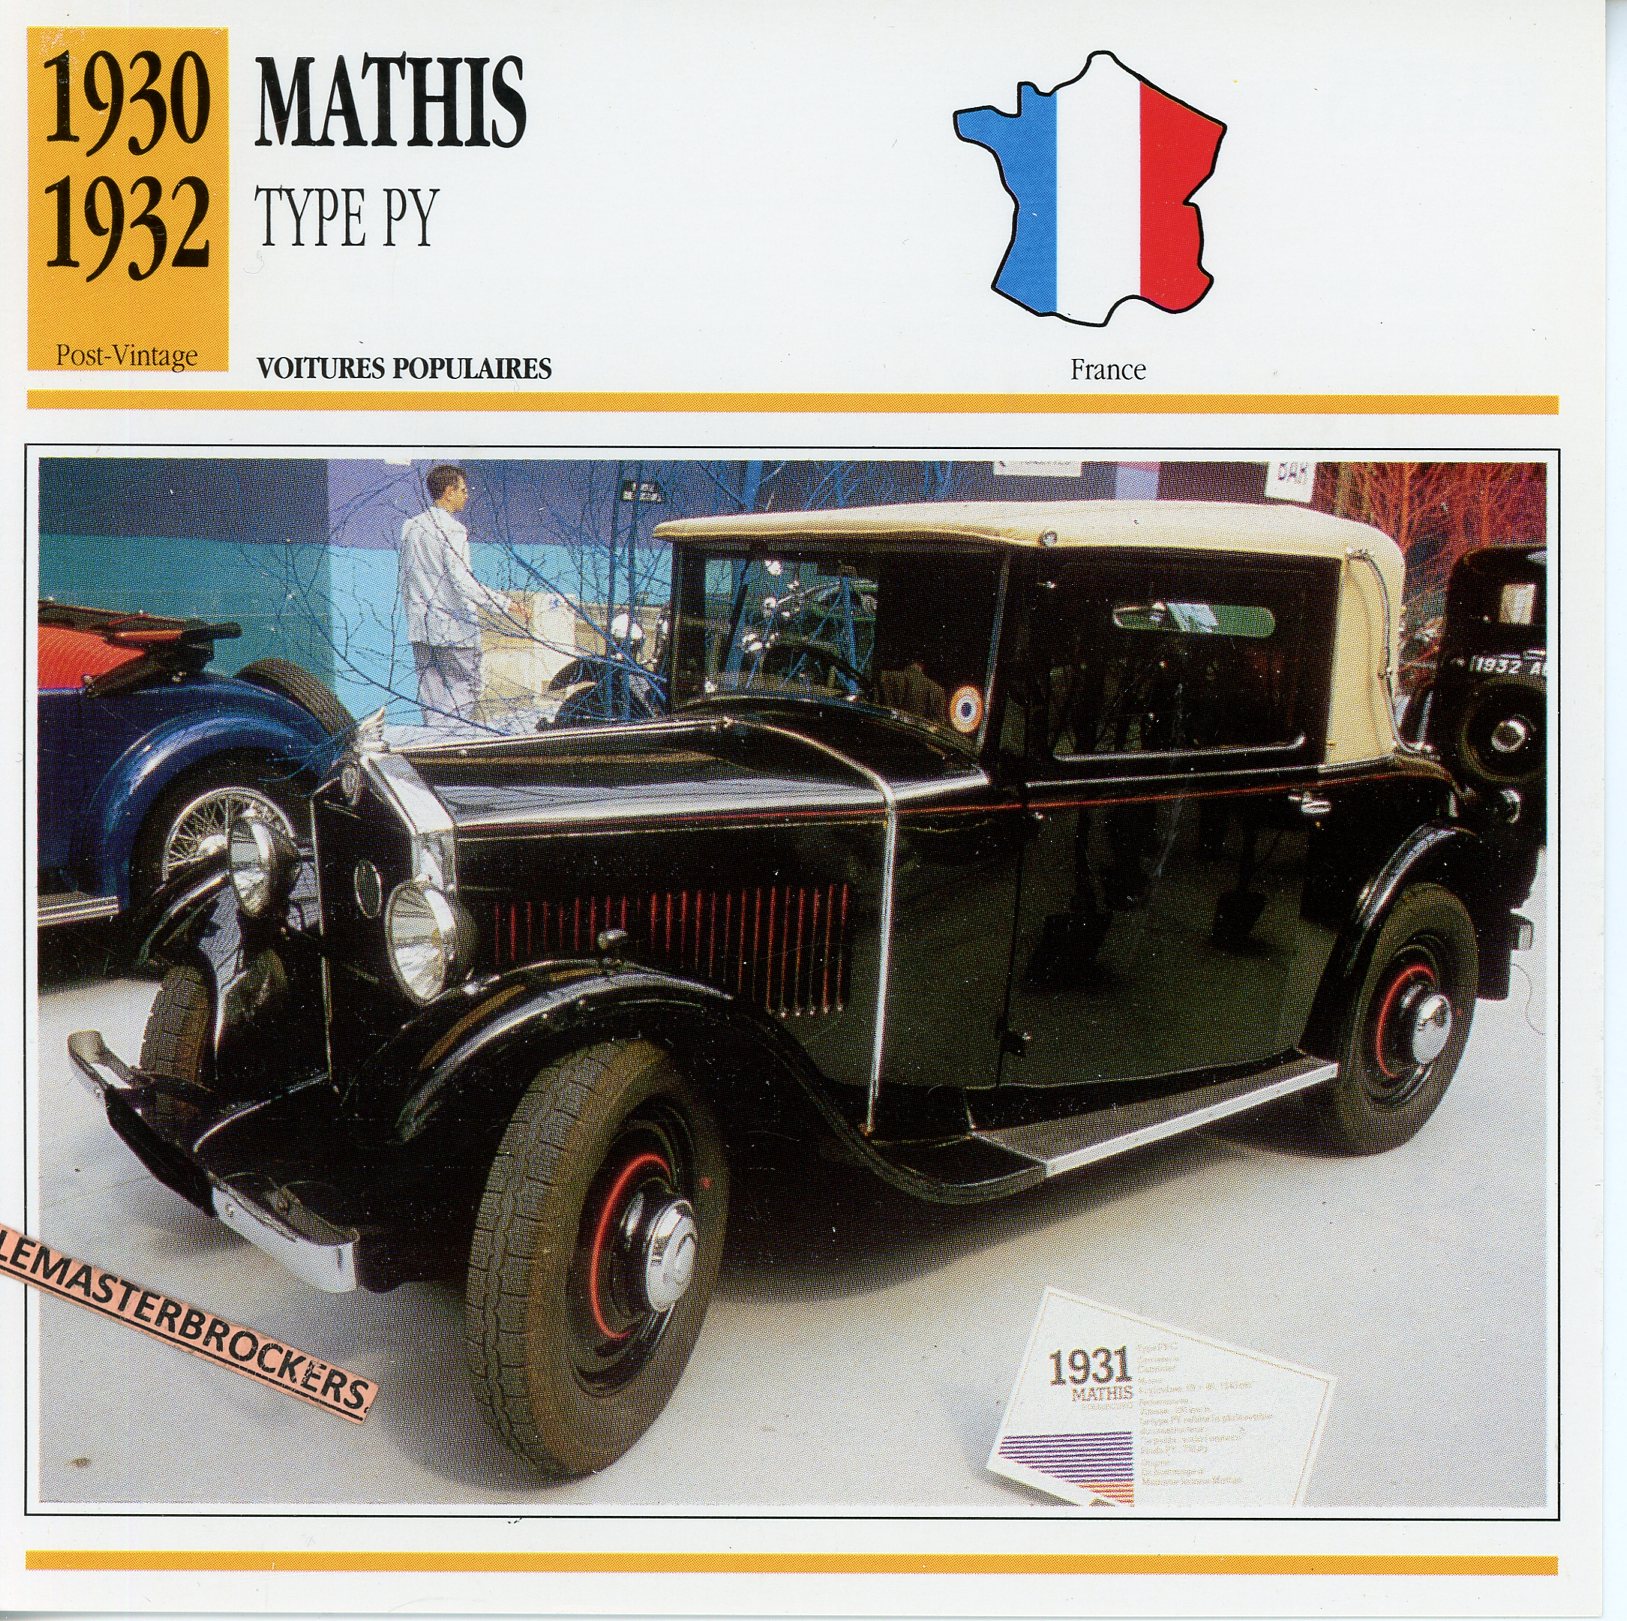 MATHIS-PY-1930-1932-FICHE-AUTO-ATLAS-LEMASTERBROCKERS